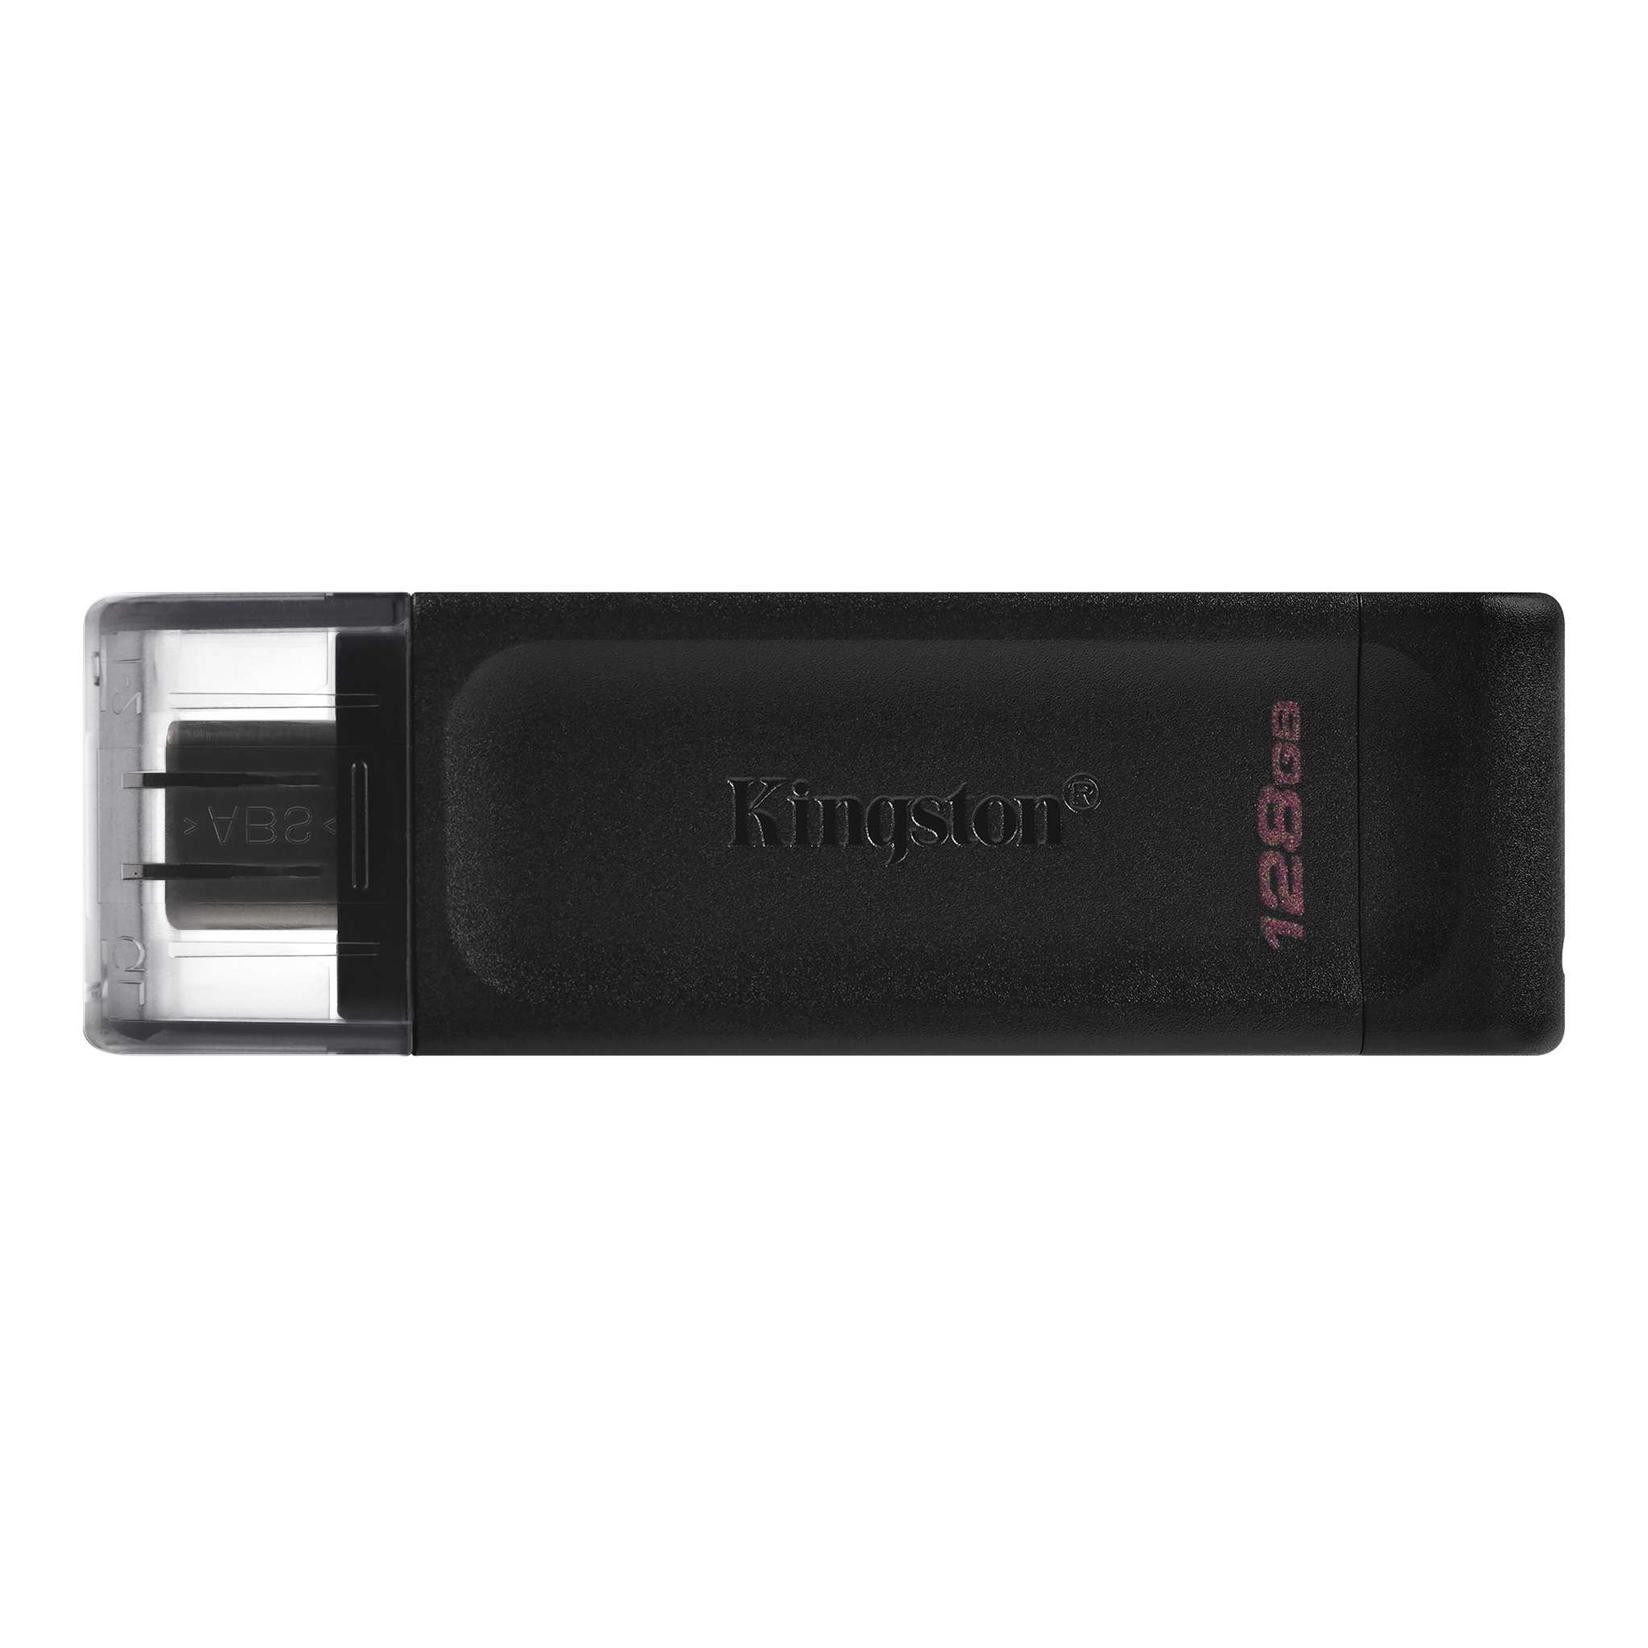 Selected image for Kingston DT70/128GB USB Flash memorija, 128 GB, Crna